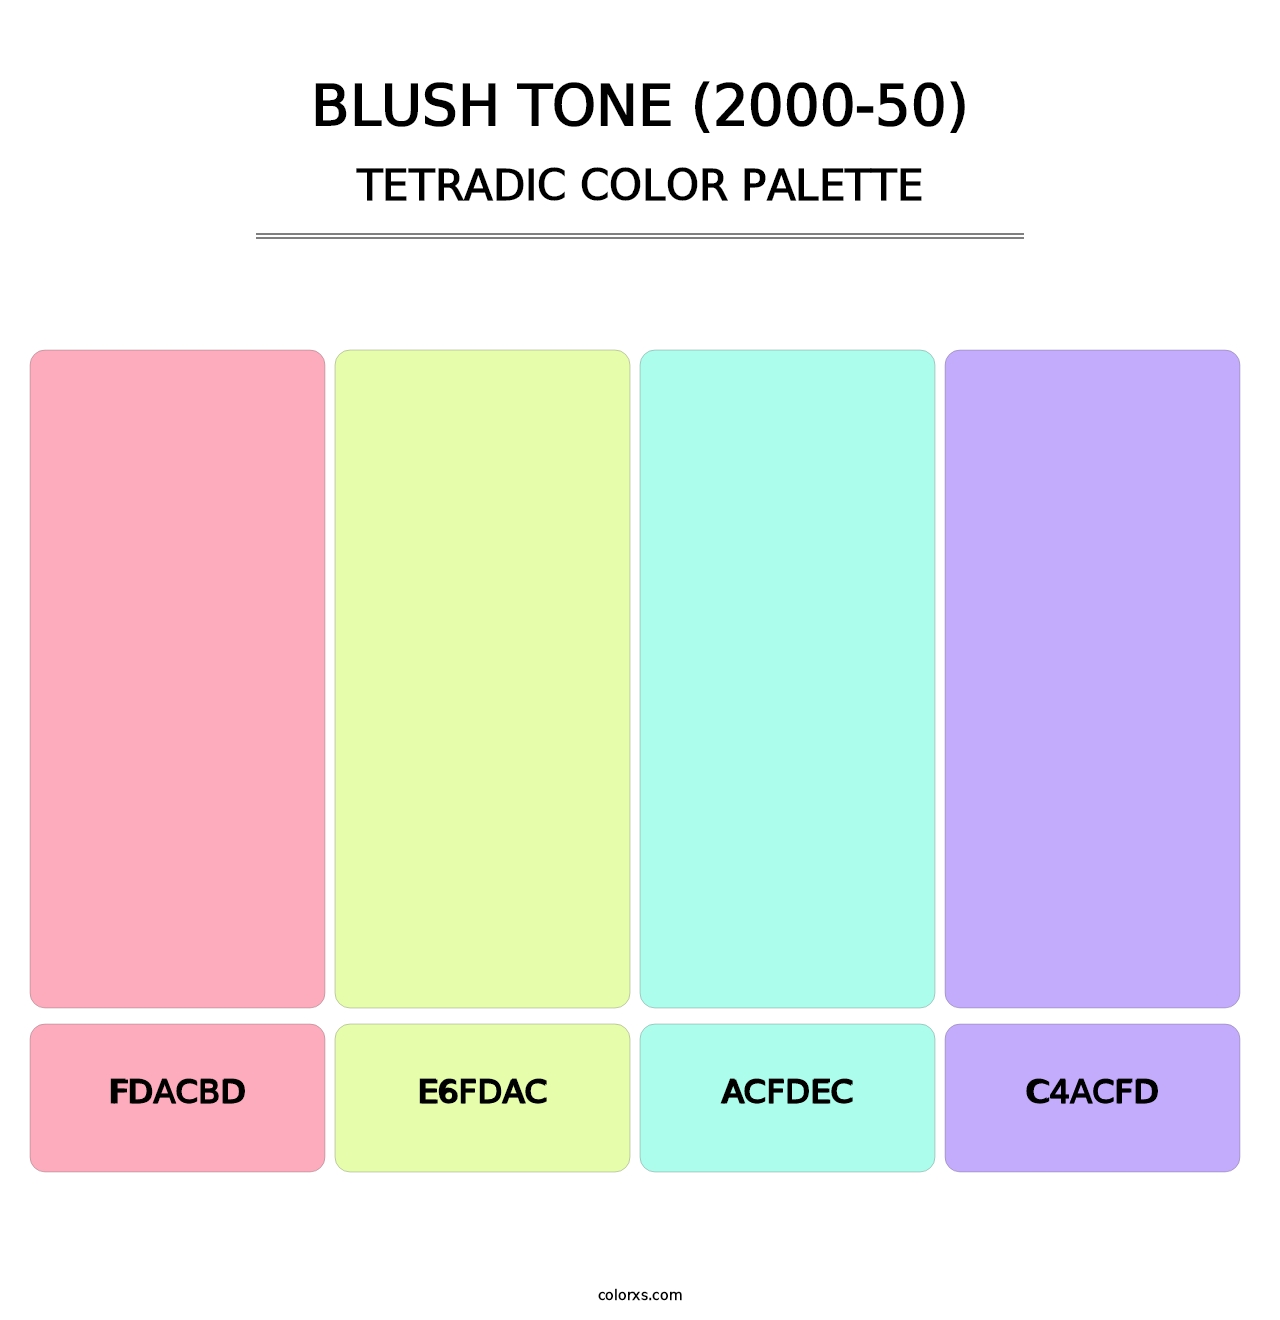 Blush Tone (2000-50) - Tetradic Color Palette